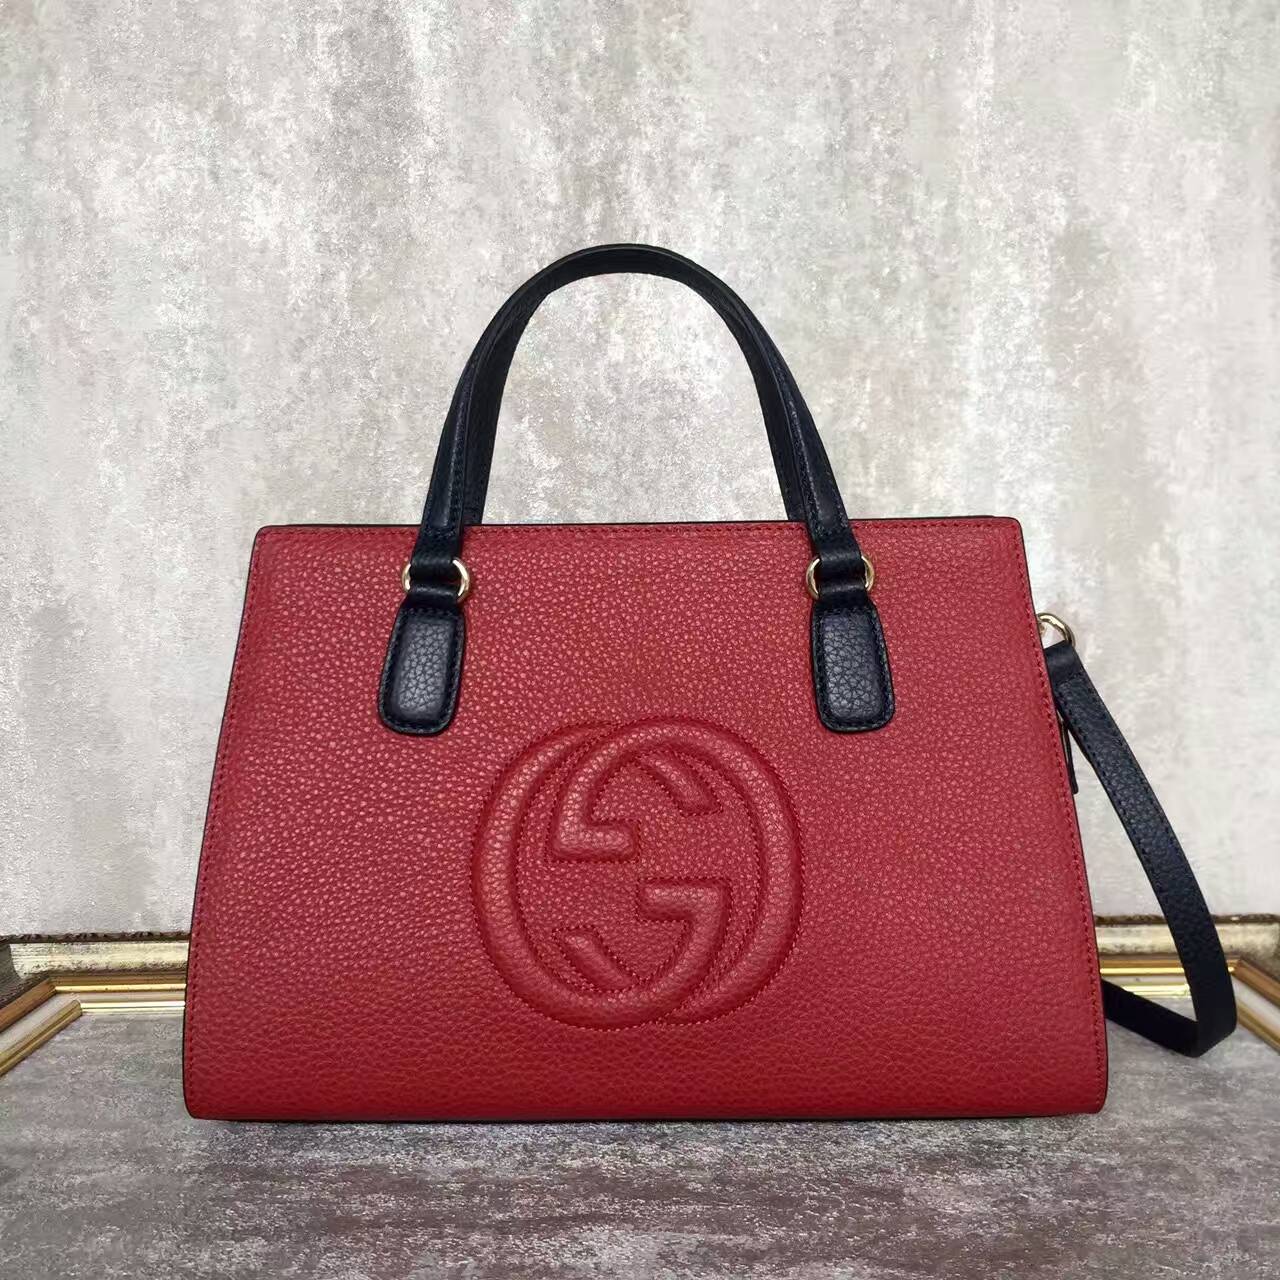 GUCCI Soho Leather Top Handle Bag 431572 Burgundy&Offwhite